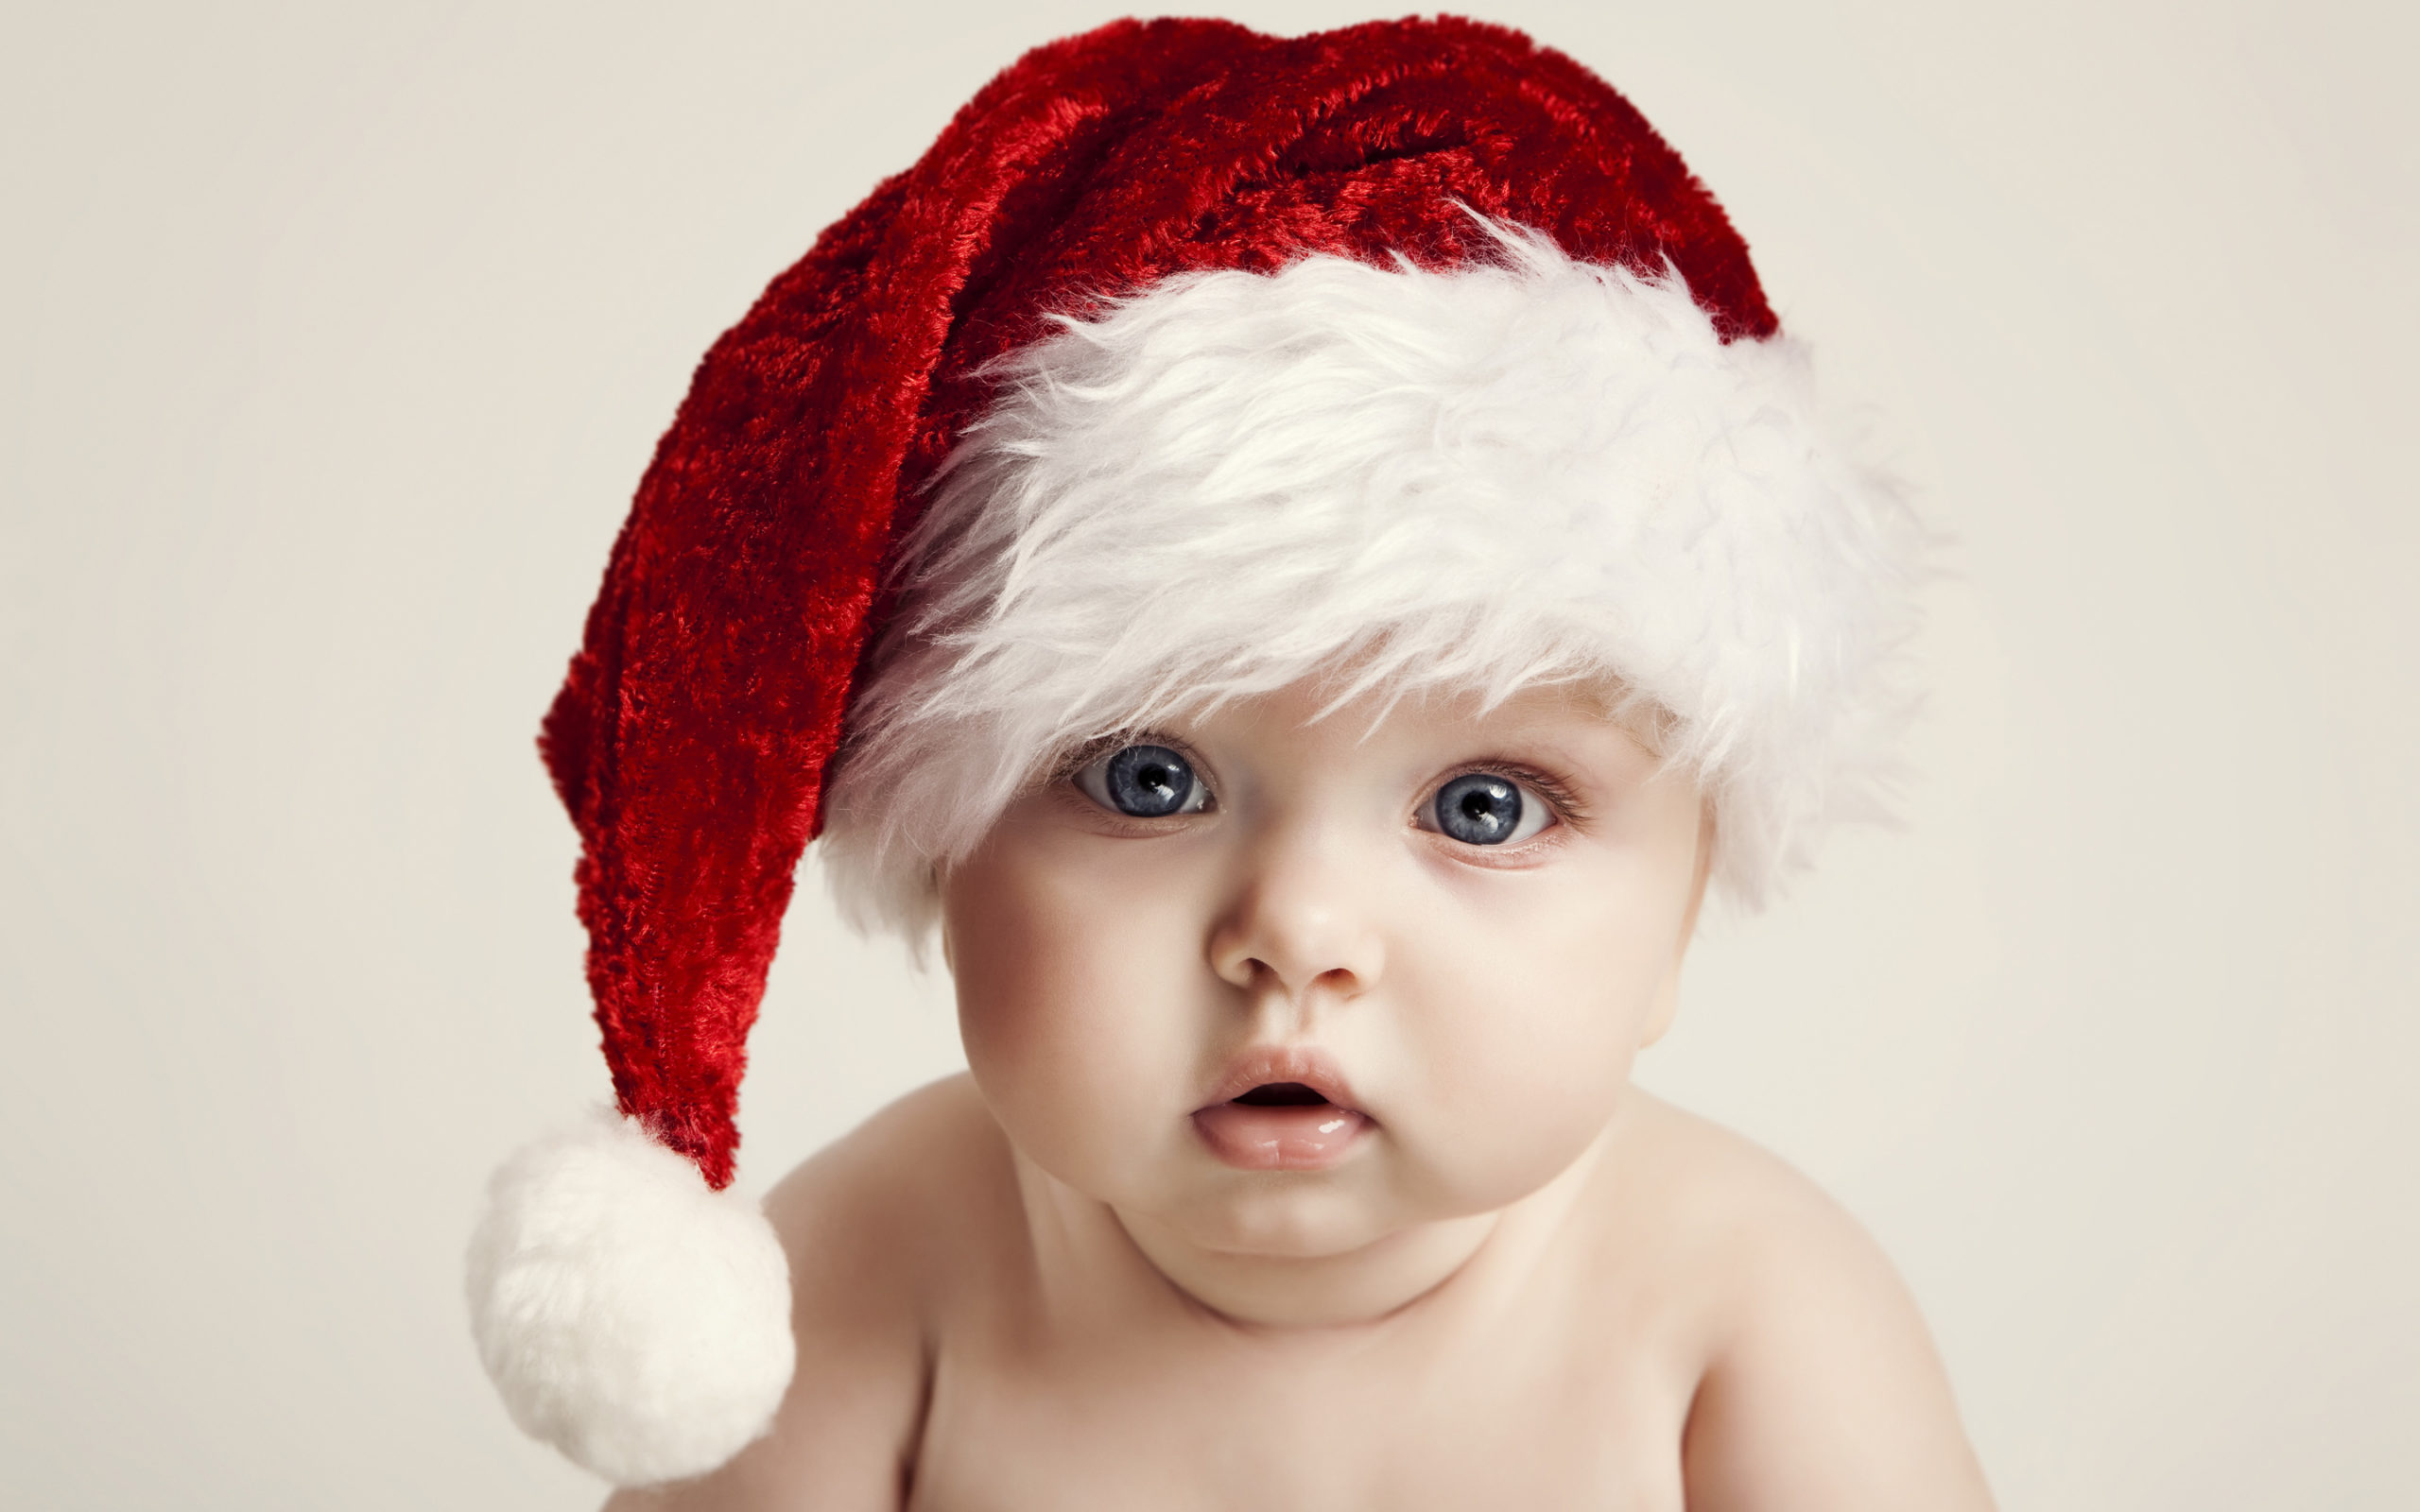 Baby wearing a santa hat